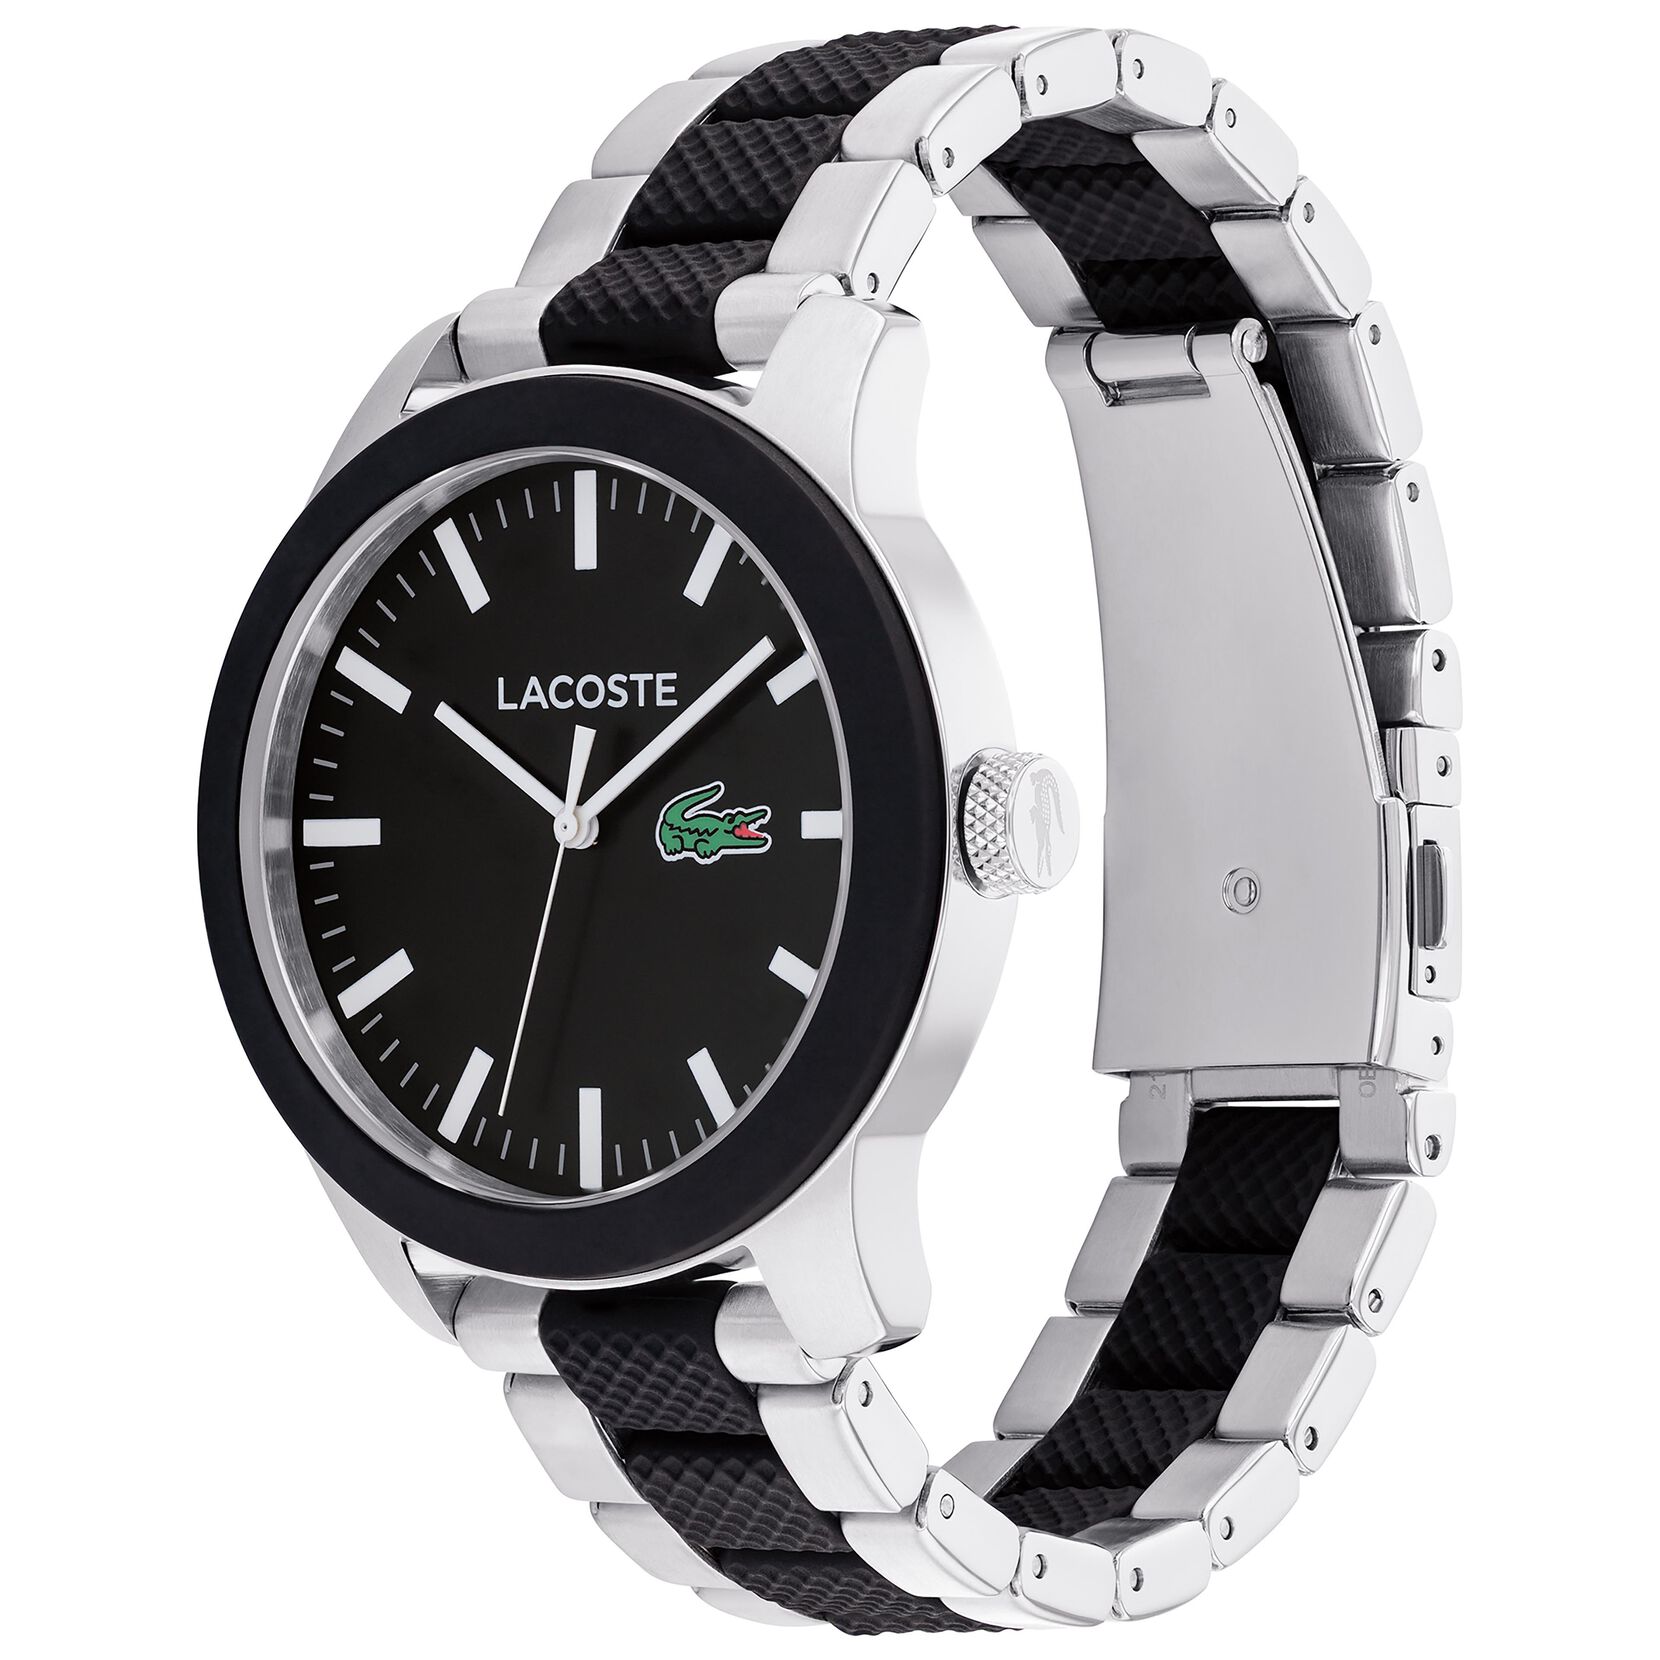 Lacoste | Movado Company Store | Lacoste 12.12 Men's Watch